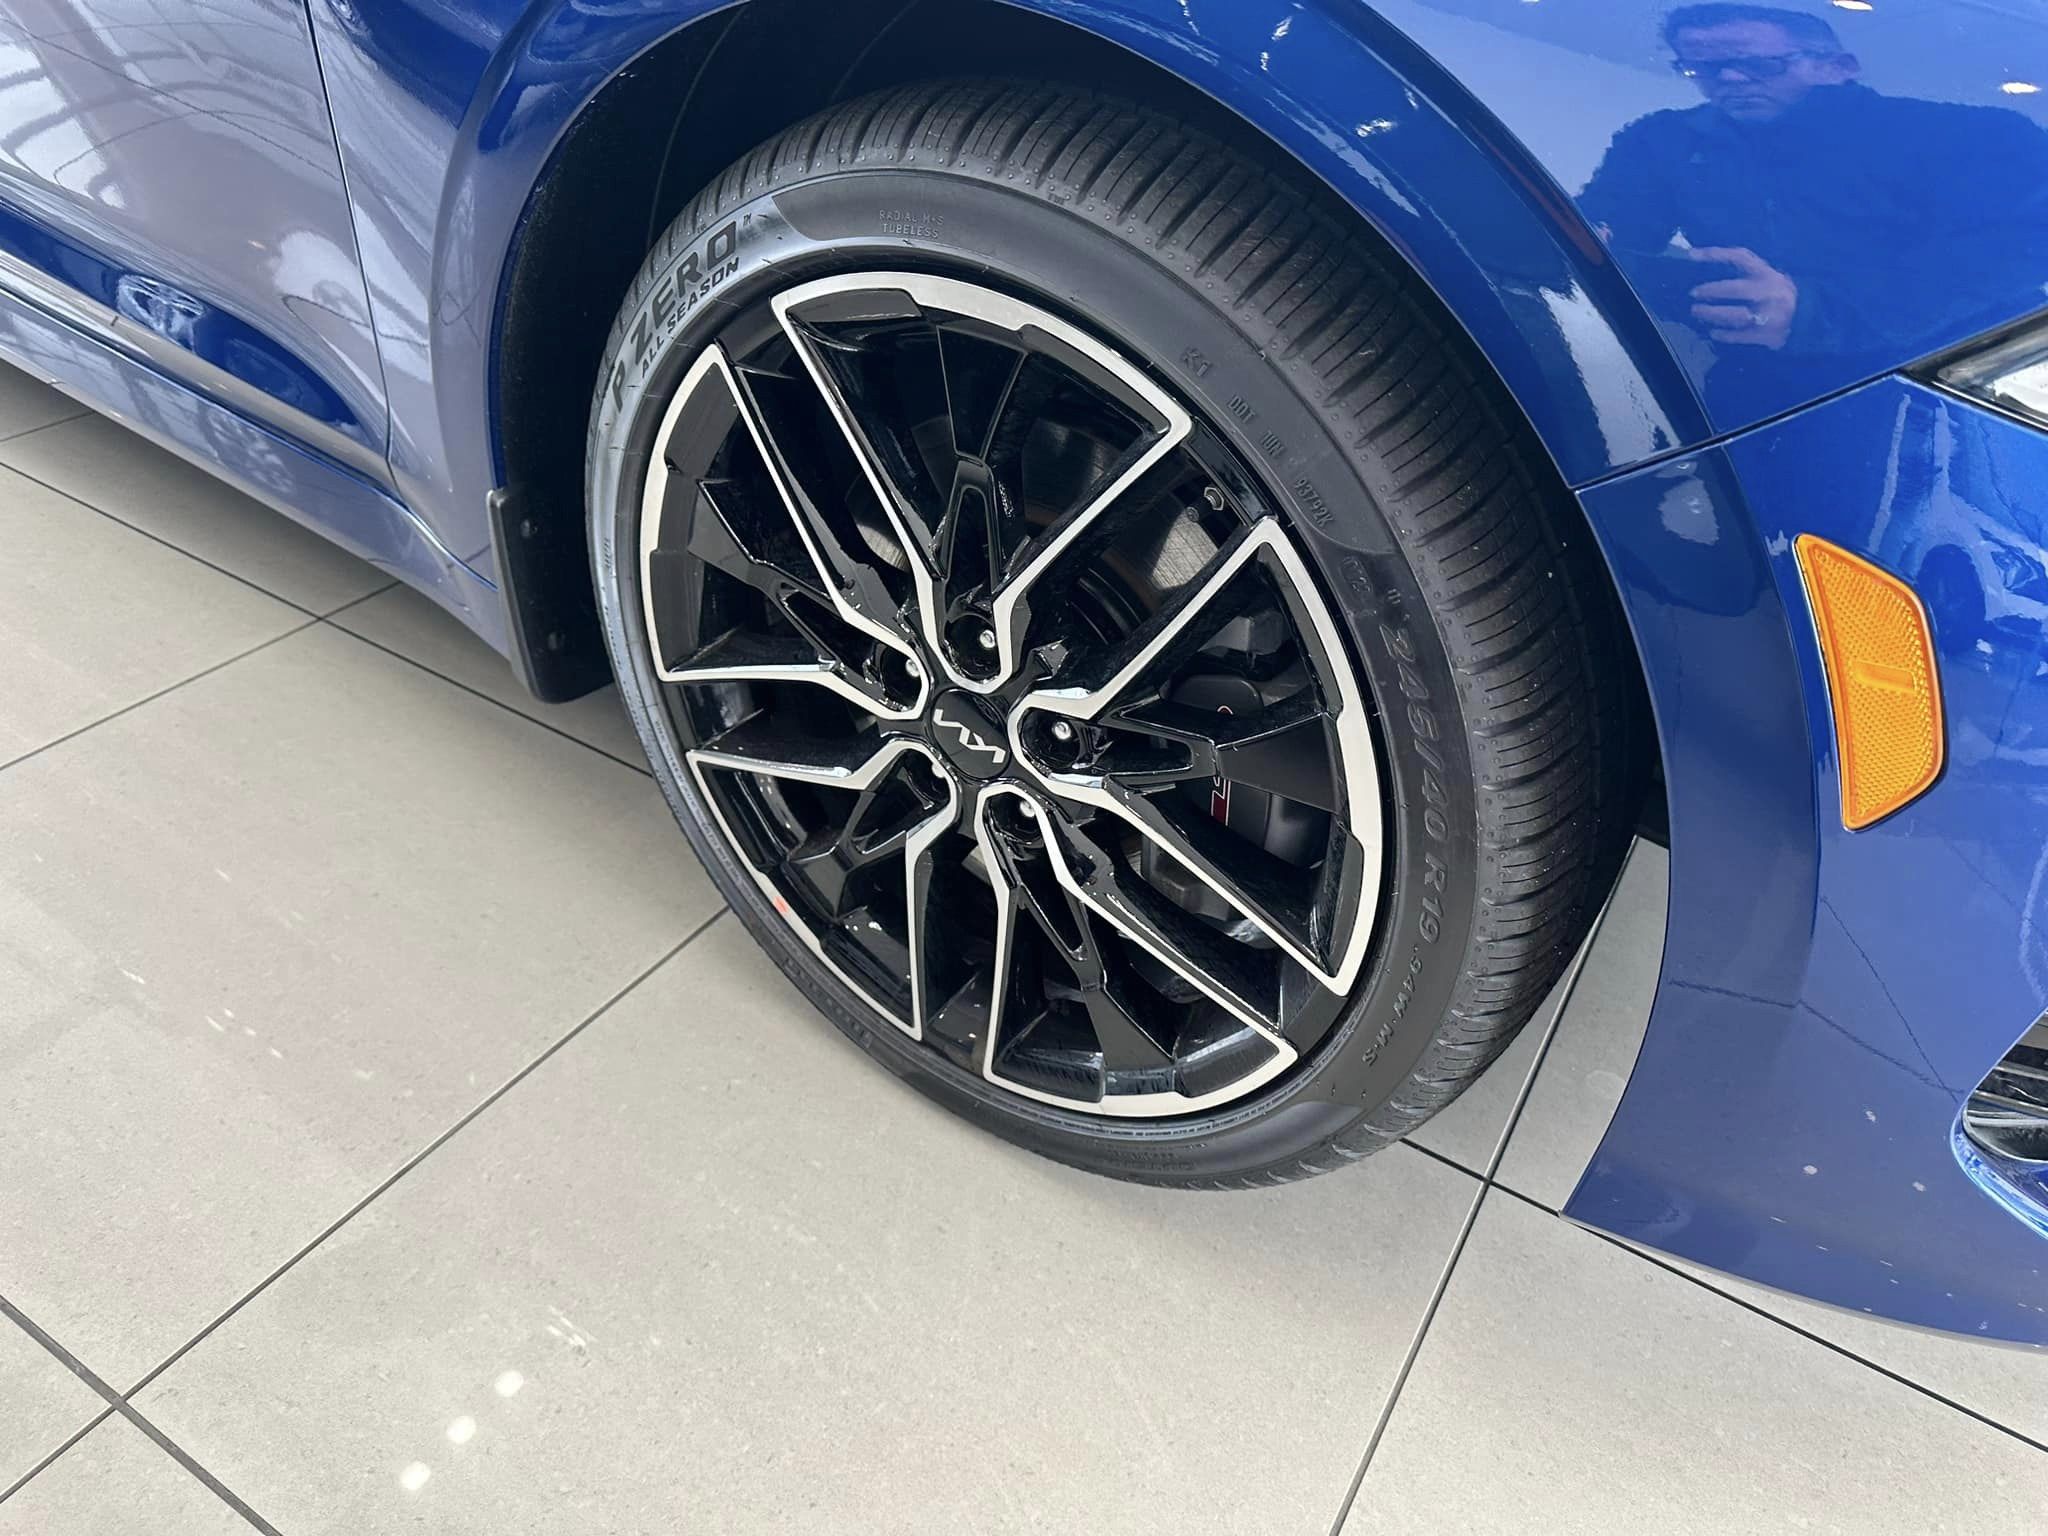 2023 Kia K5 - Saphire Blue GT FWD - Rims